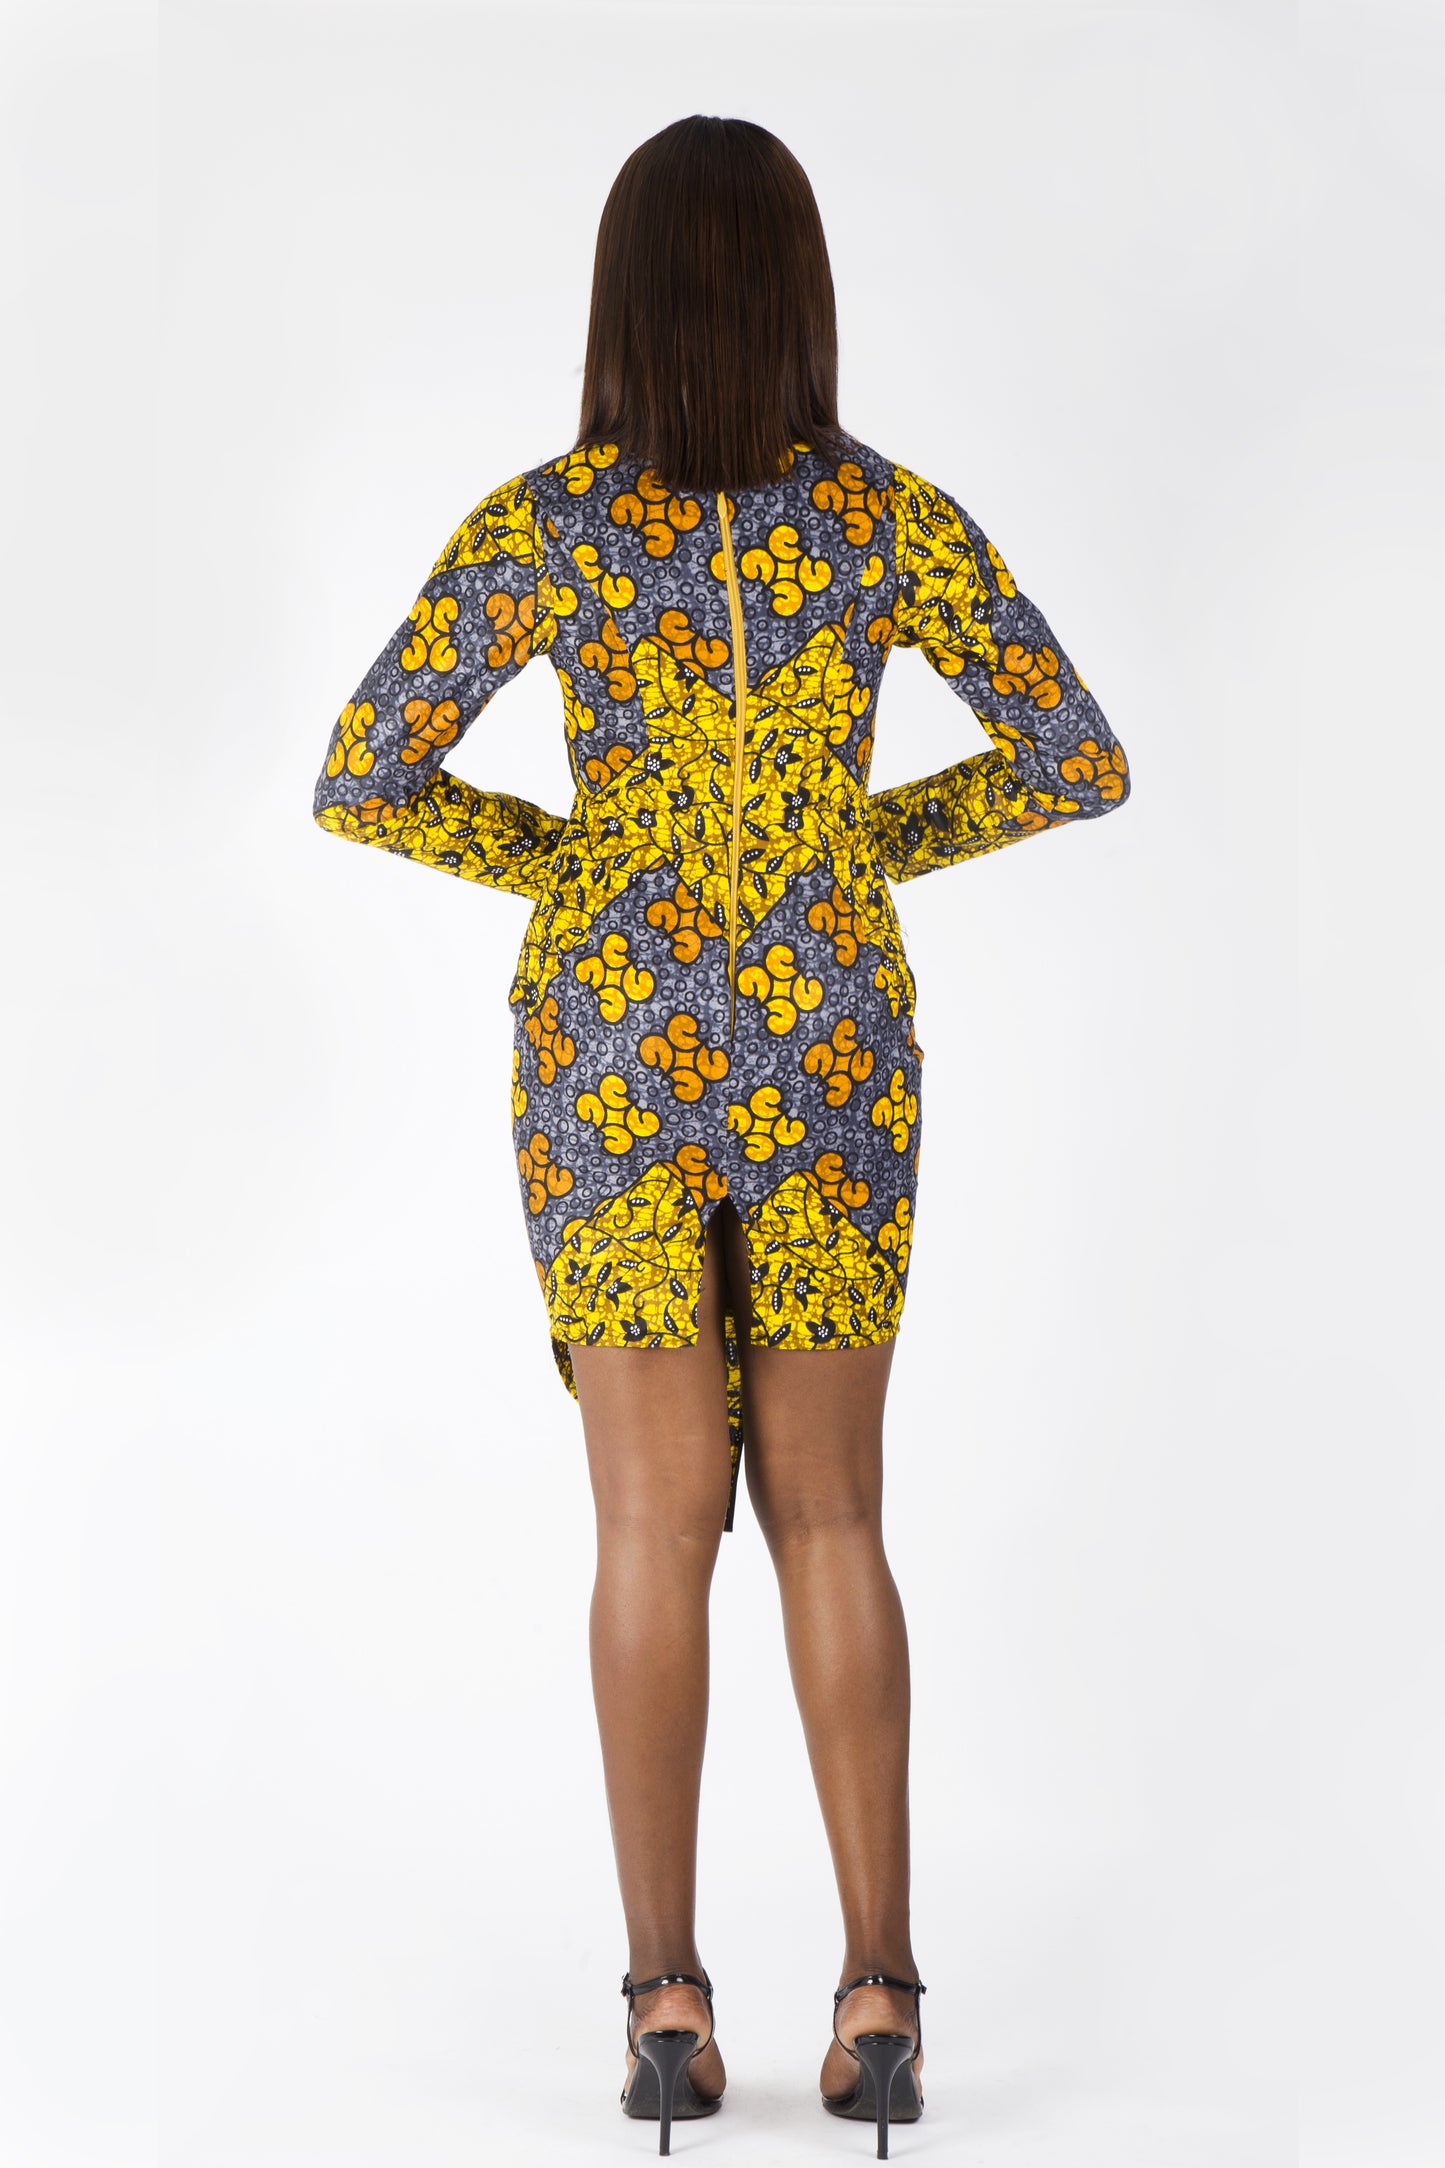 ORANGE GREY AFRICAN ANKARA PRINT PLUS SIZE CLOTHING PARTY DRESS